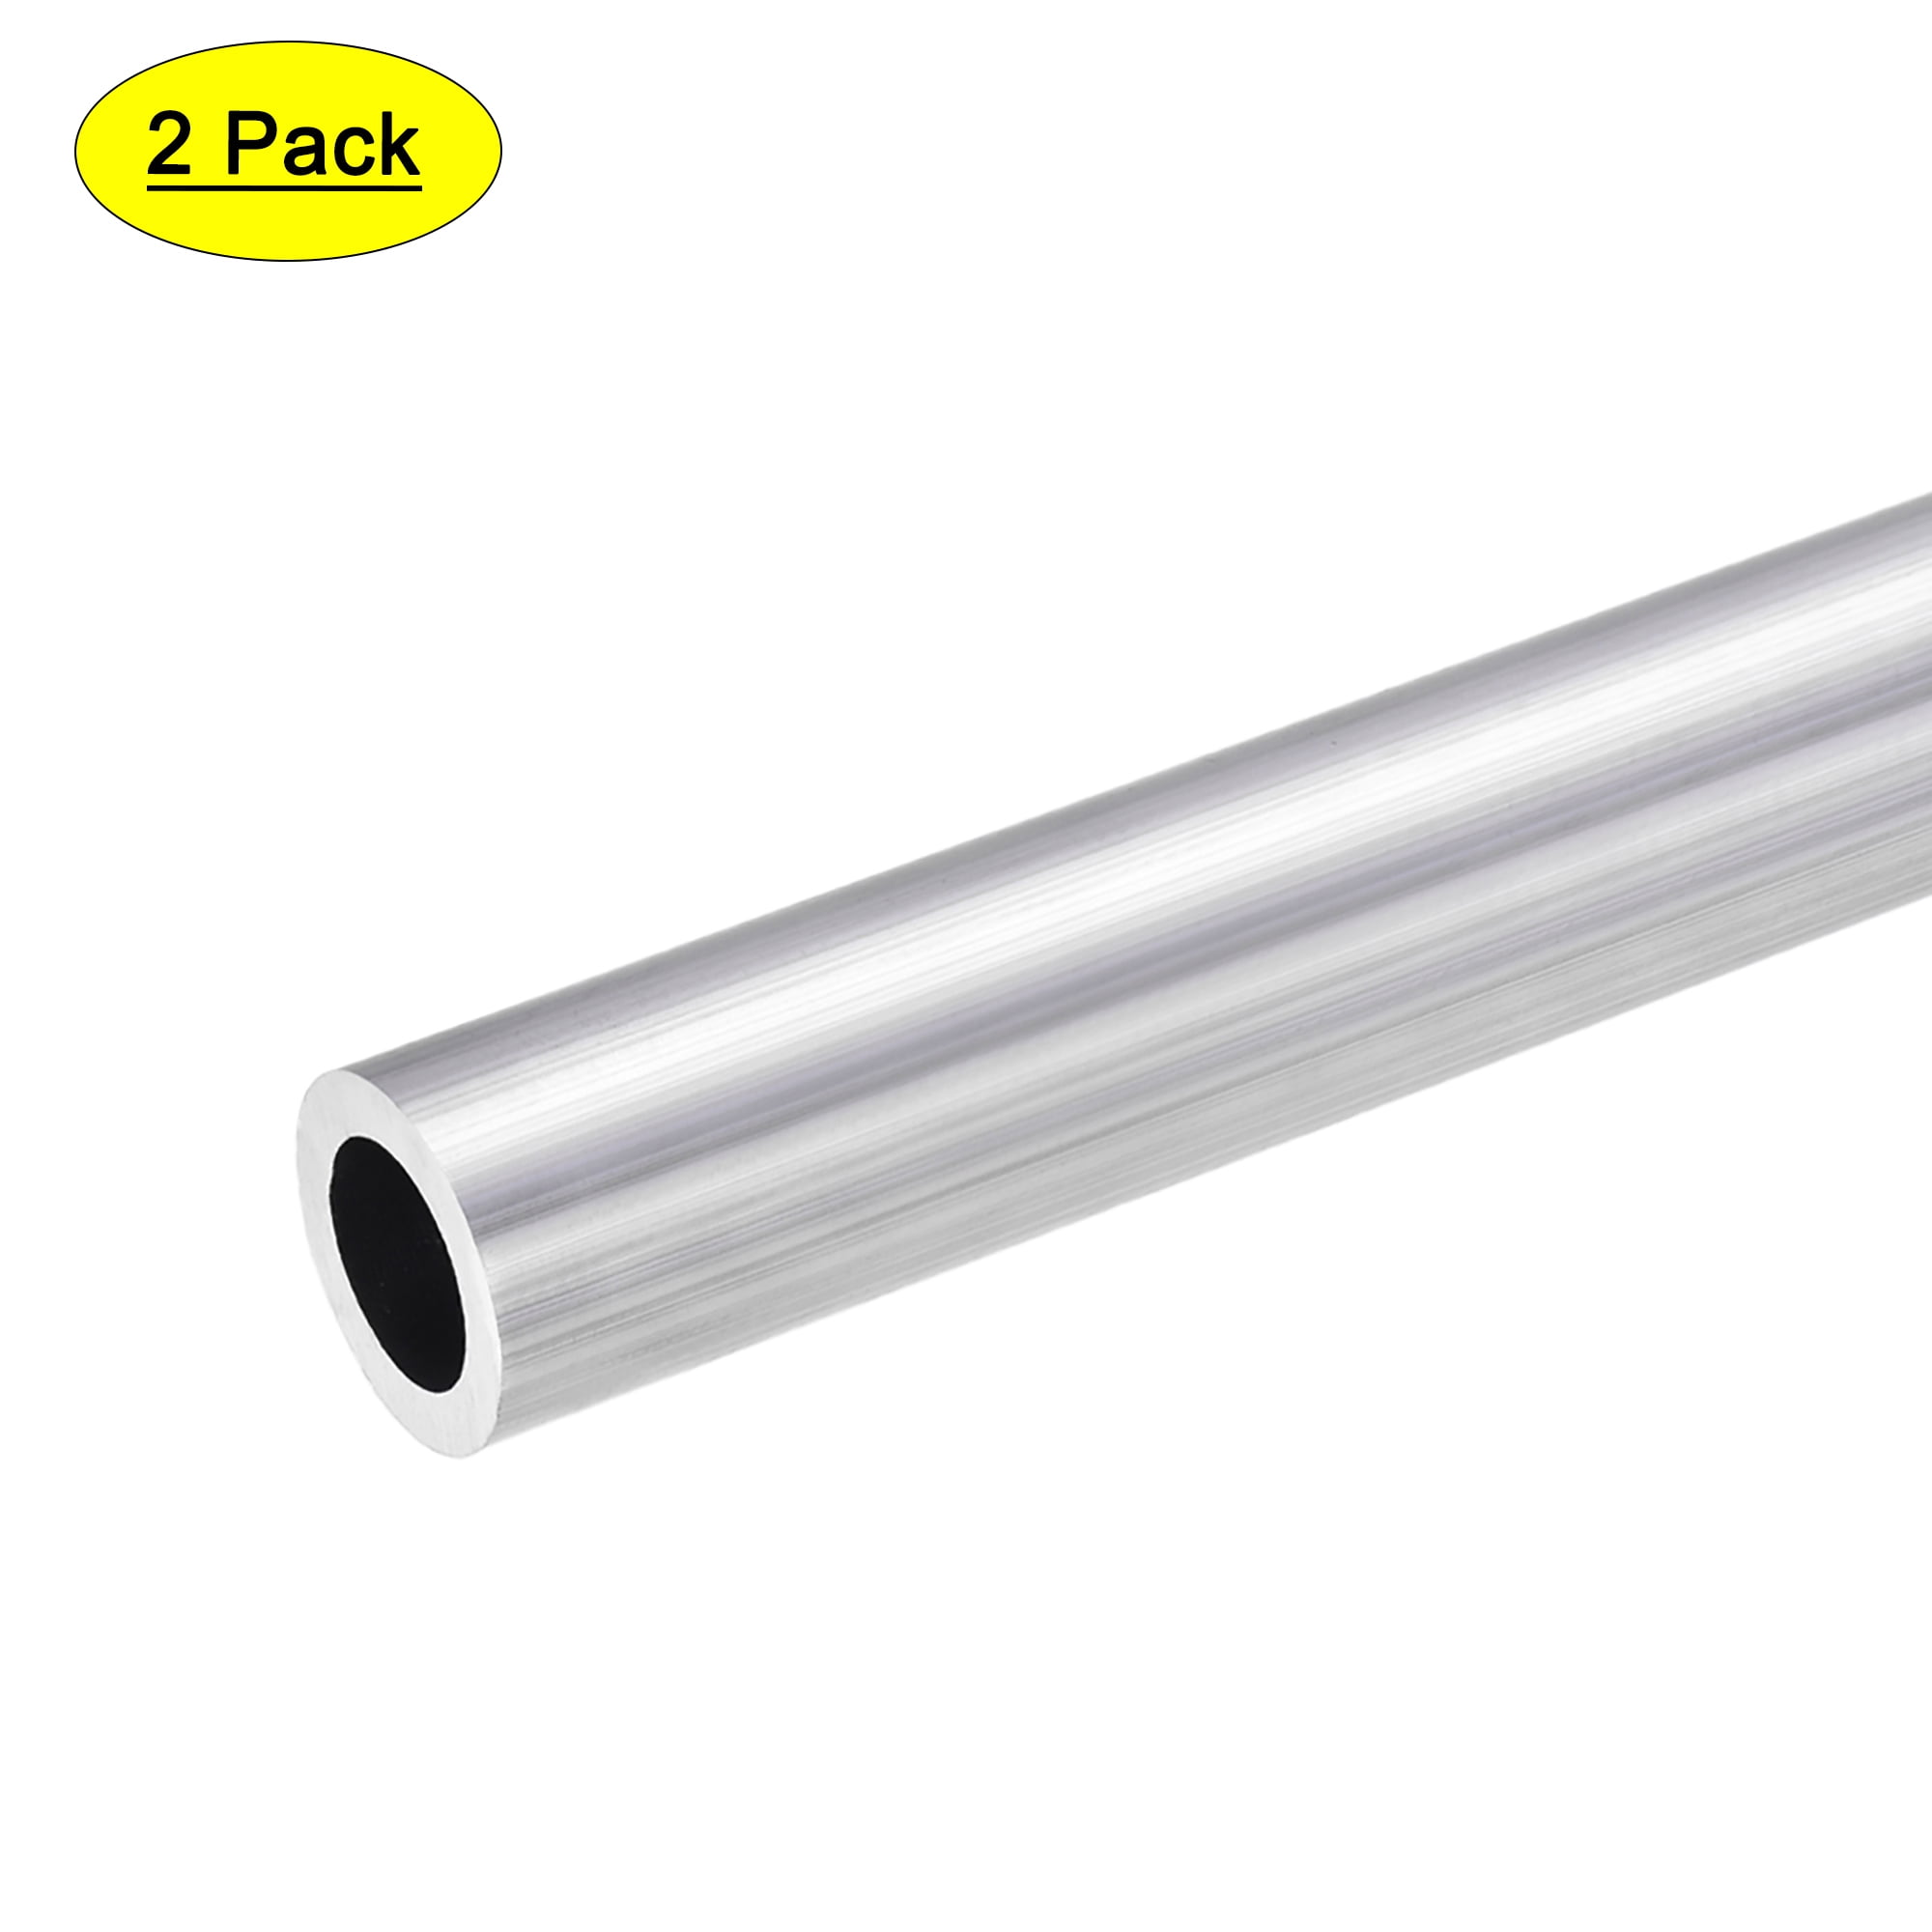 2.5mm wall in 1m Lengths. High Quality Rigid Grey Plastic Tube 17mm o/d 